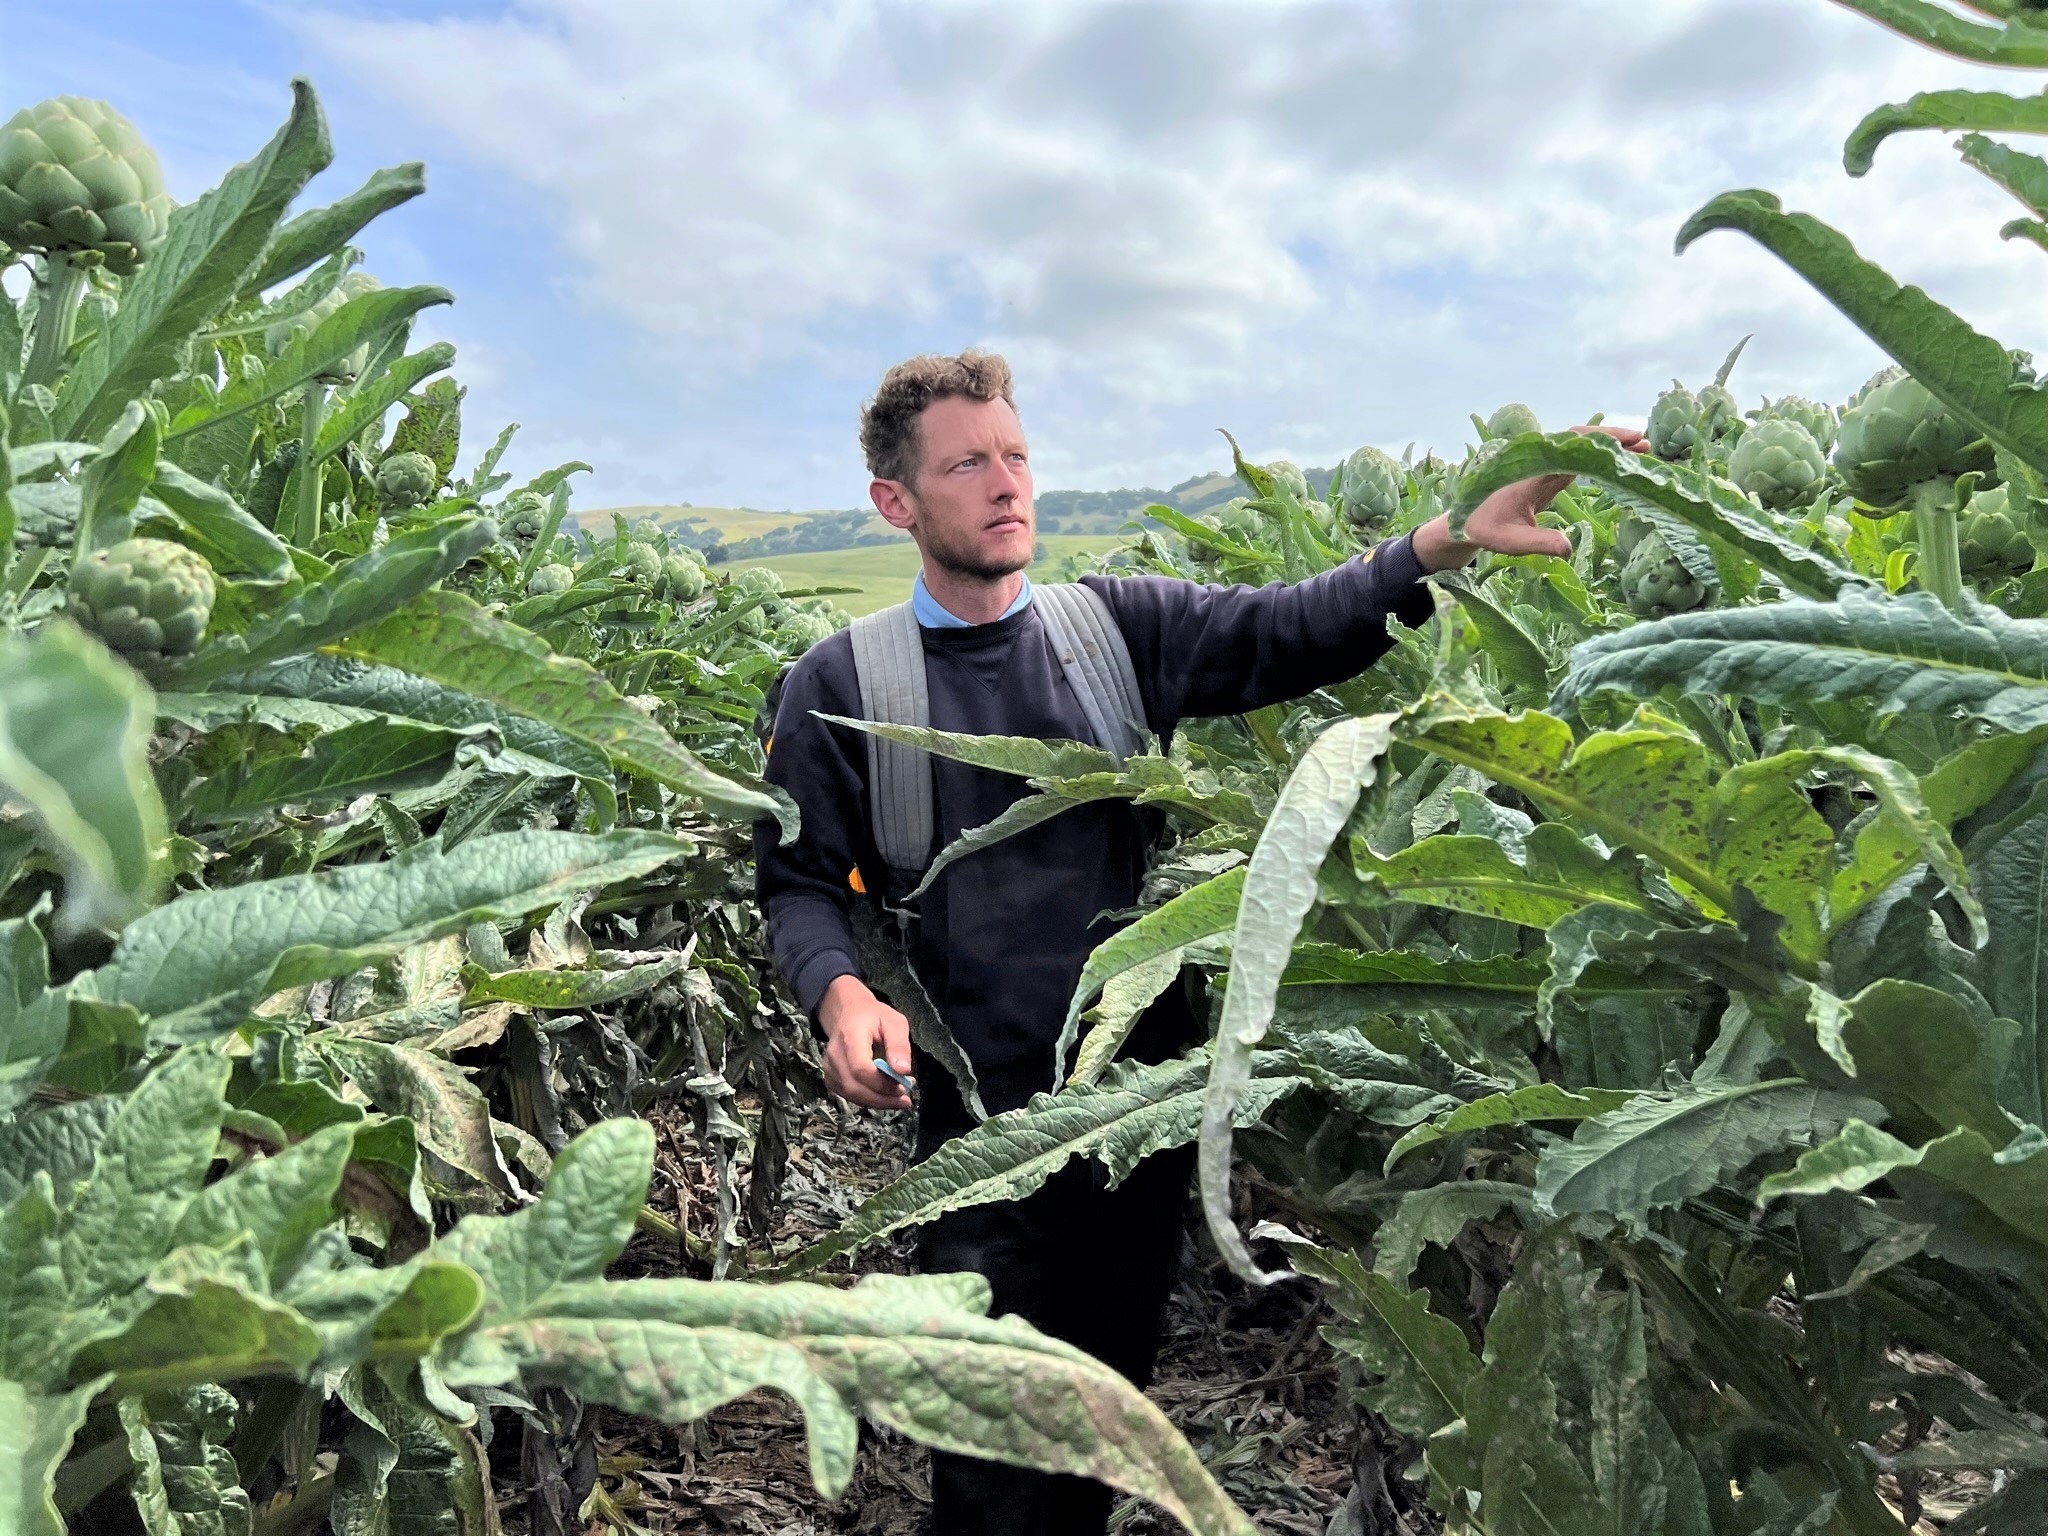 Sam Thorp picks artichokes on his family's Gilroy farm, Spade & Plow.